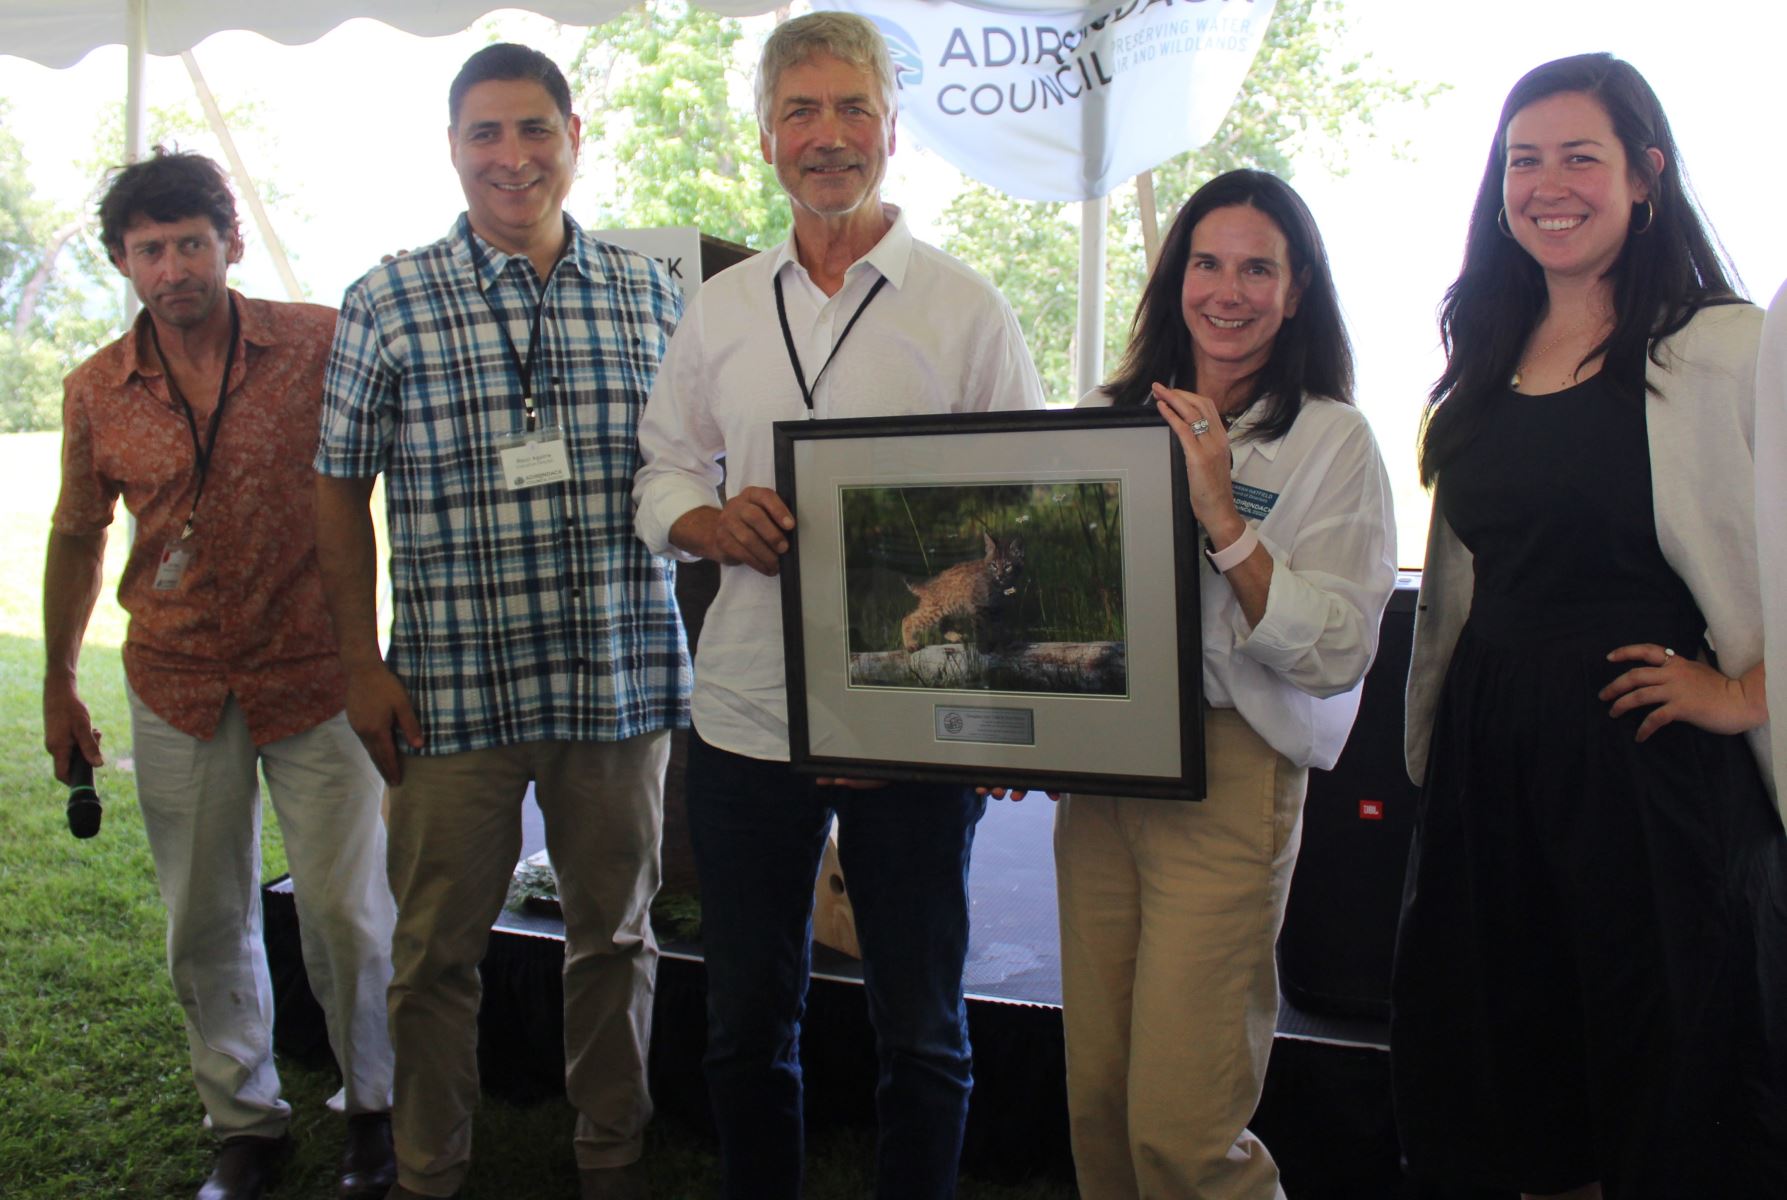 Chris Maron and CATS receive Adirondack Council award